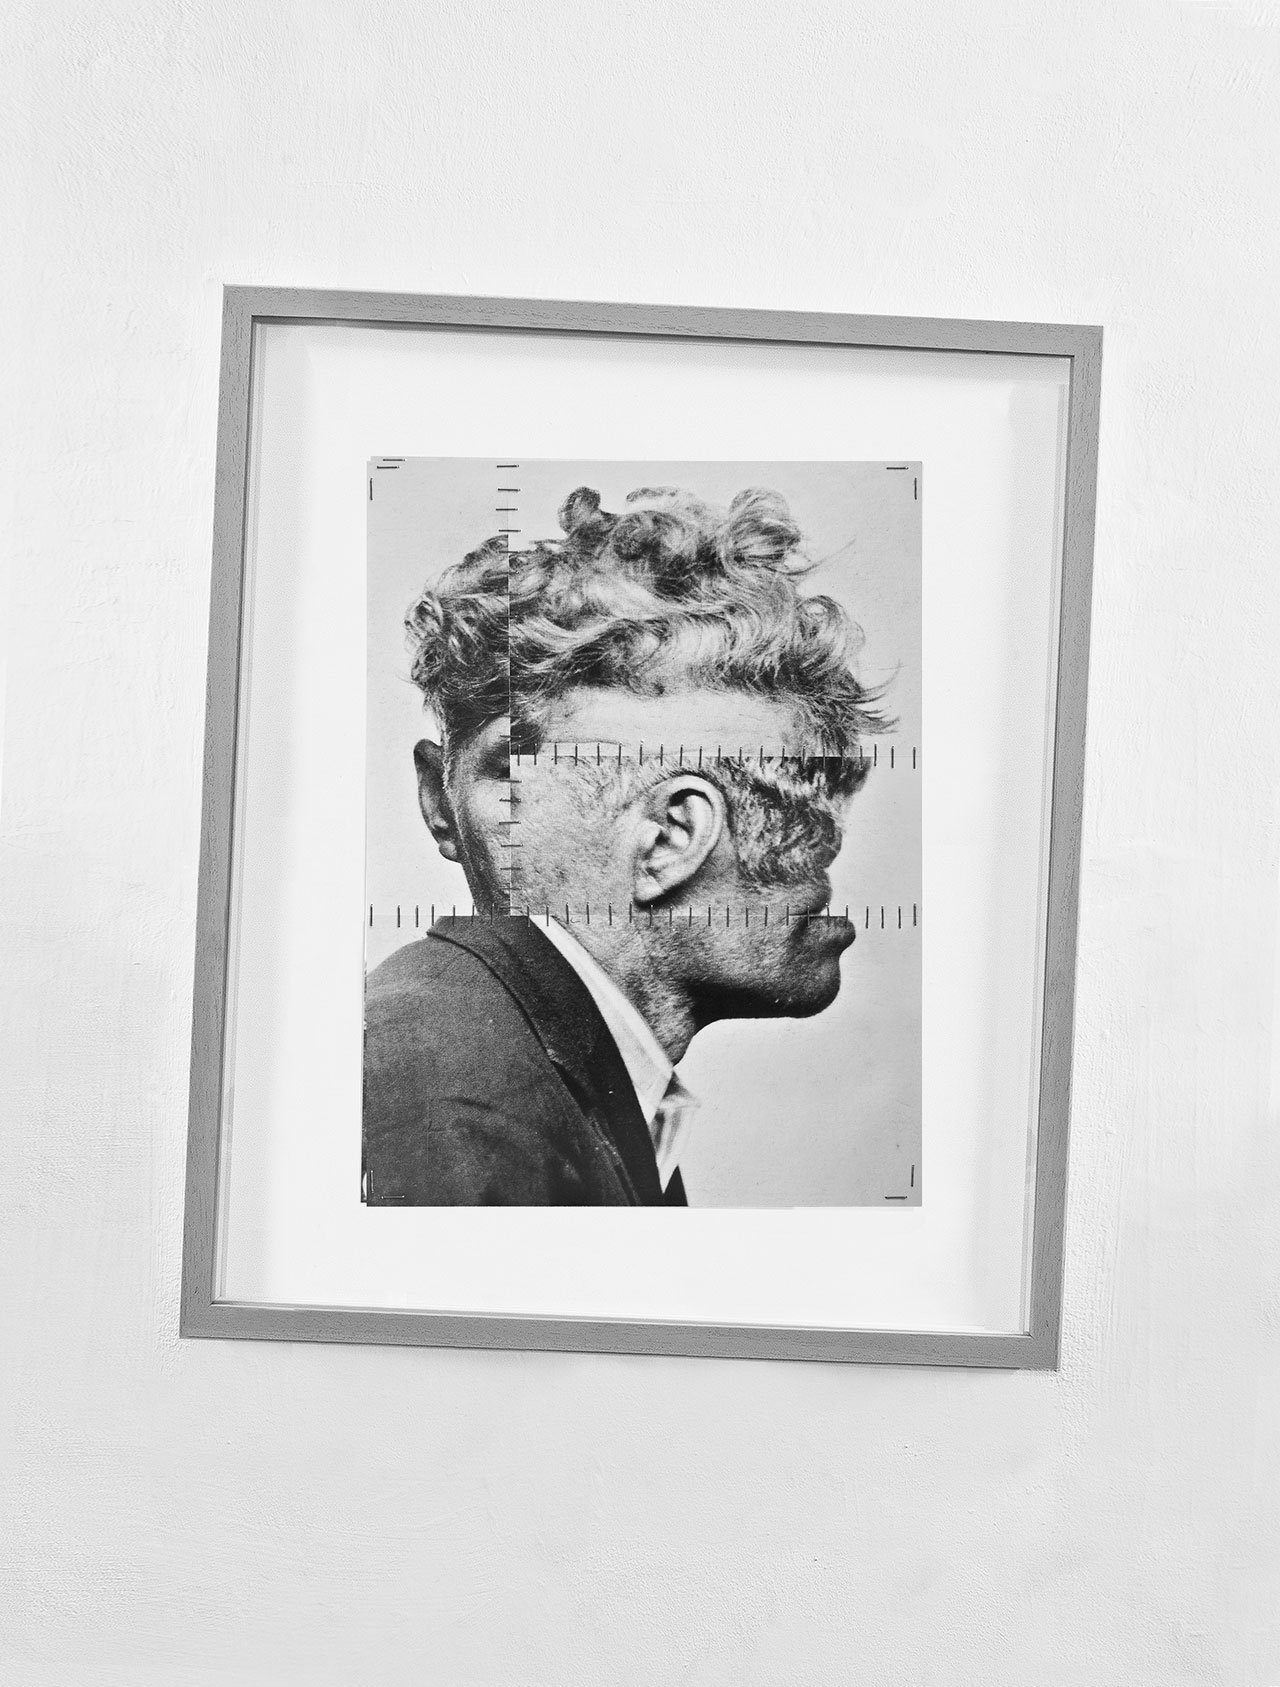 Bernhard Hosa，来自 Auf der Suche nach dem richtigen Bild 系列，2012。胶合板和纸板喷墨打印，订书钉，39,5 x 29,5 厘米 - 60 x 50 厘米，3 + 1 AE。 伯恩哈德·霍萨摄。 向艺术家致敬。 对于这个系列，Hosa 拼贴了 20 世纪一本关于面相学的书中发现的精神病患者的肖像。 